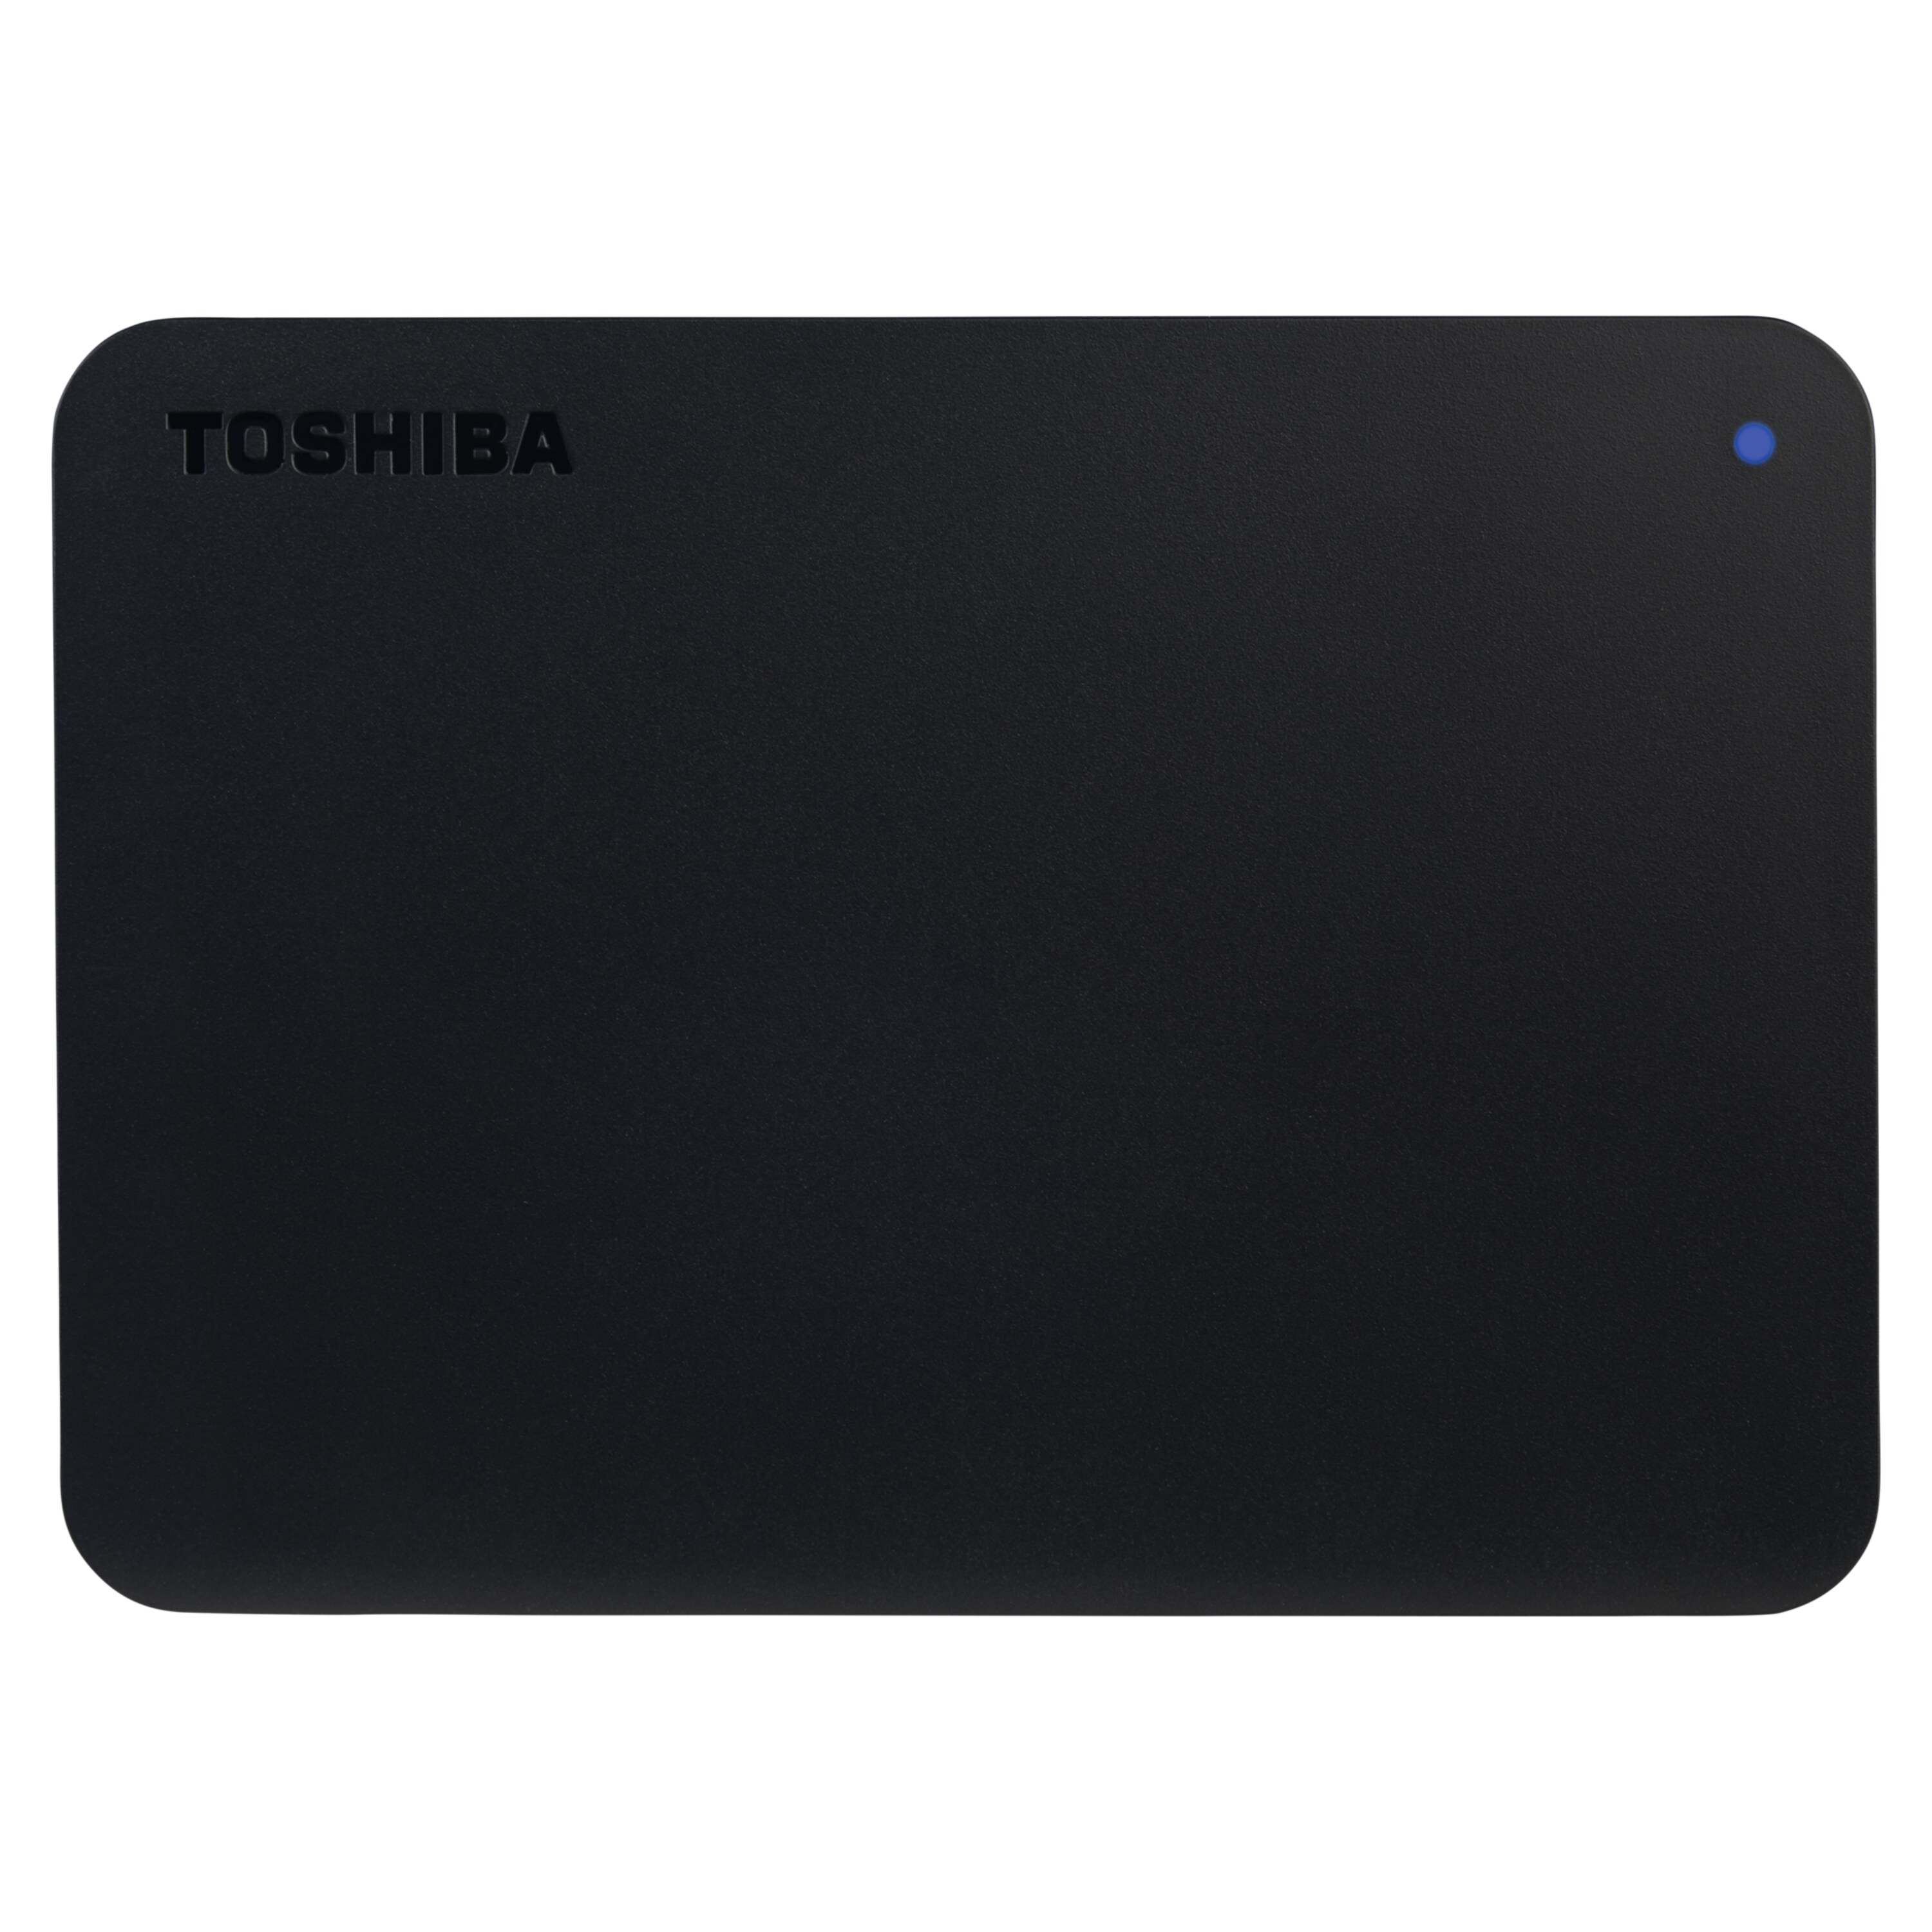 TOSHIBA CANVIO Basics 1 TB externe 2,5'' Festplatte, USB 3.0, Plug & Play, Stromversorgung über USB, schlankes Design